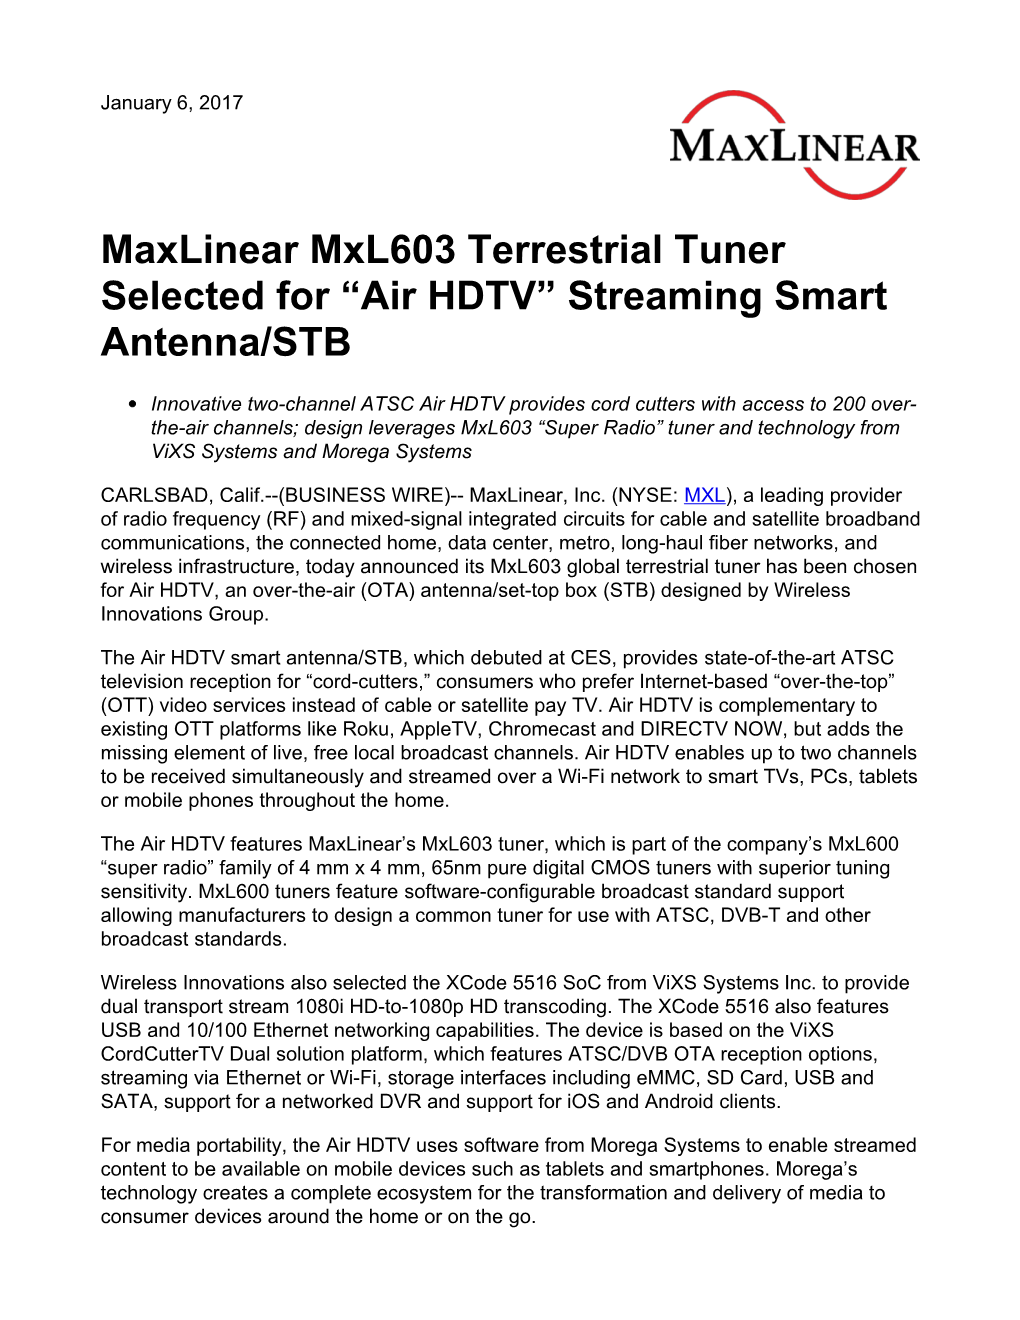 Maxlinear Mxl603 Terrestrial Tuner Selected for “Air HDTV” Streaming Smart Antenna/STB